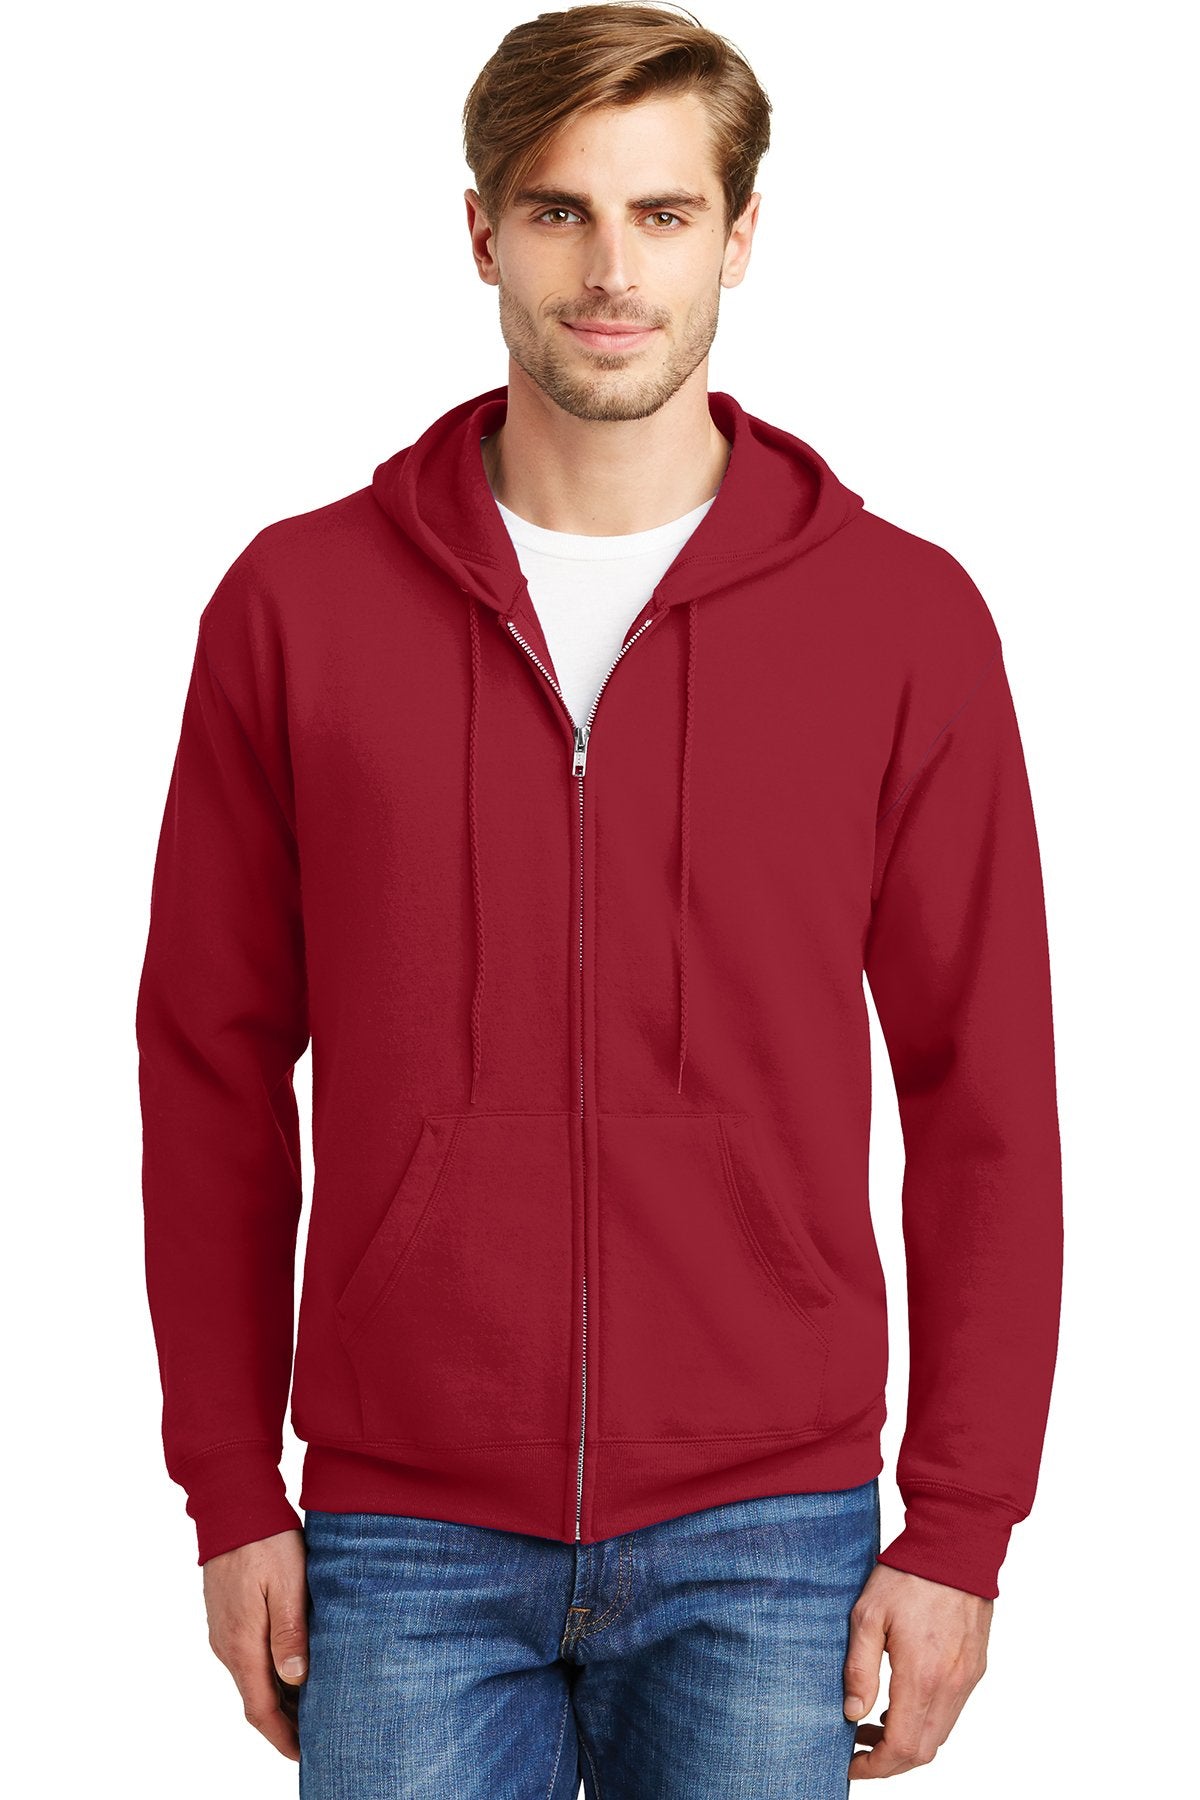 hanes deep red p180 custom dri fit sweatshirts